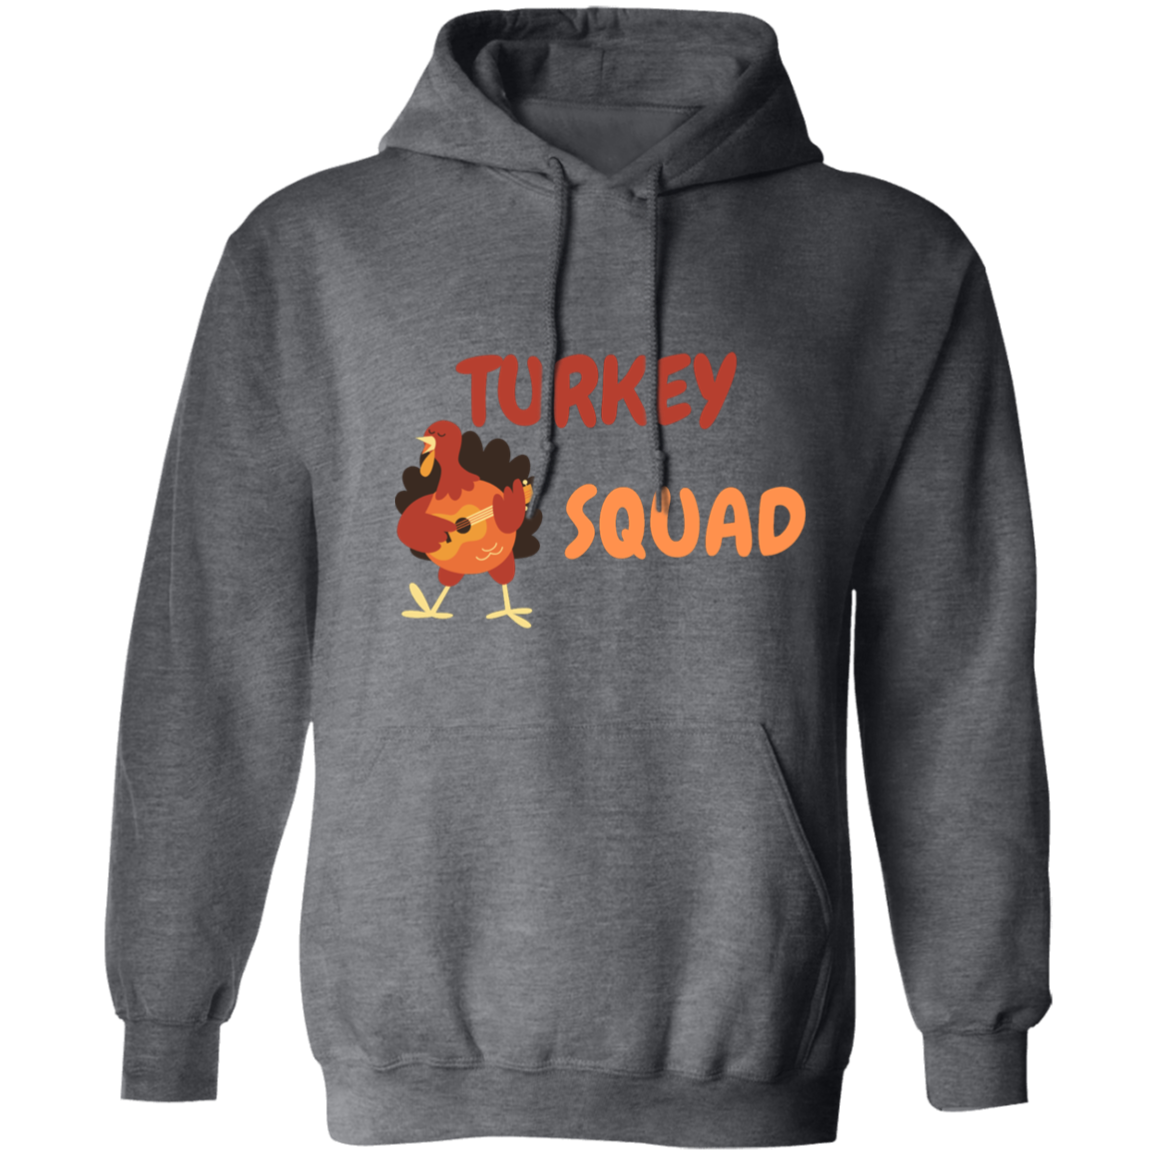 Thanksgiving Sweatshirt Pullover Hoodie Turkey Squad, Birthday Gift